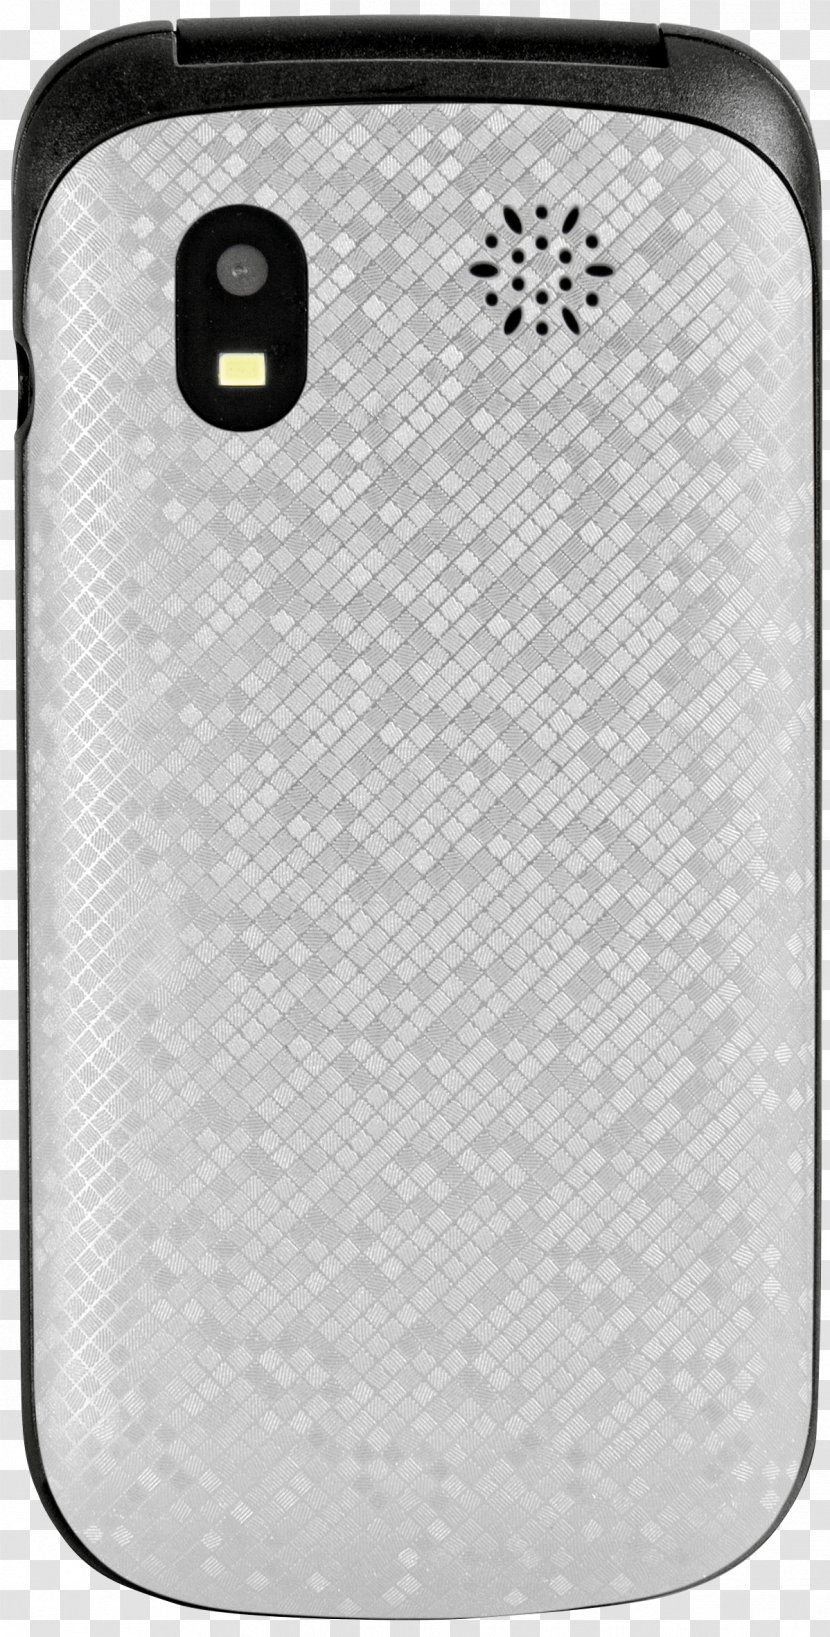 Feature Phone IPhone Clamshell Design Dual Sim Beafon AL560 Outdoor Mobile - Phones - Single Tone Transparent PNG